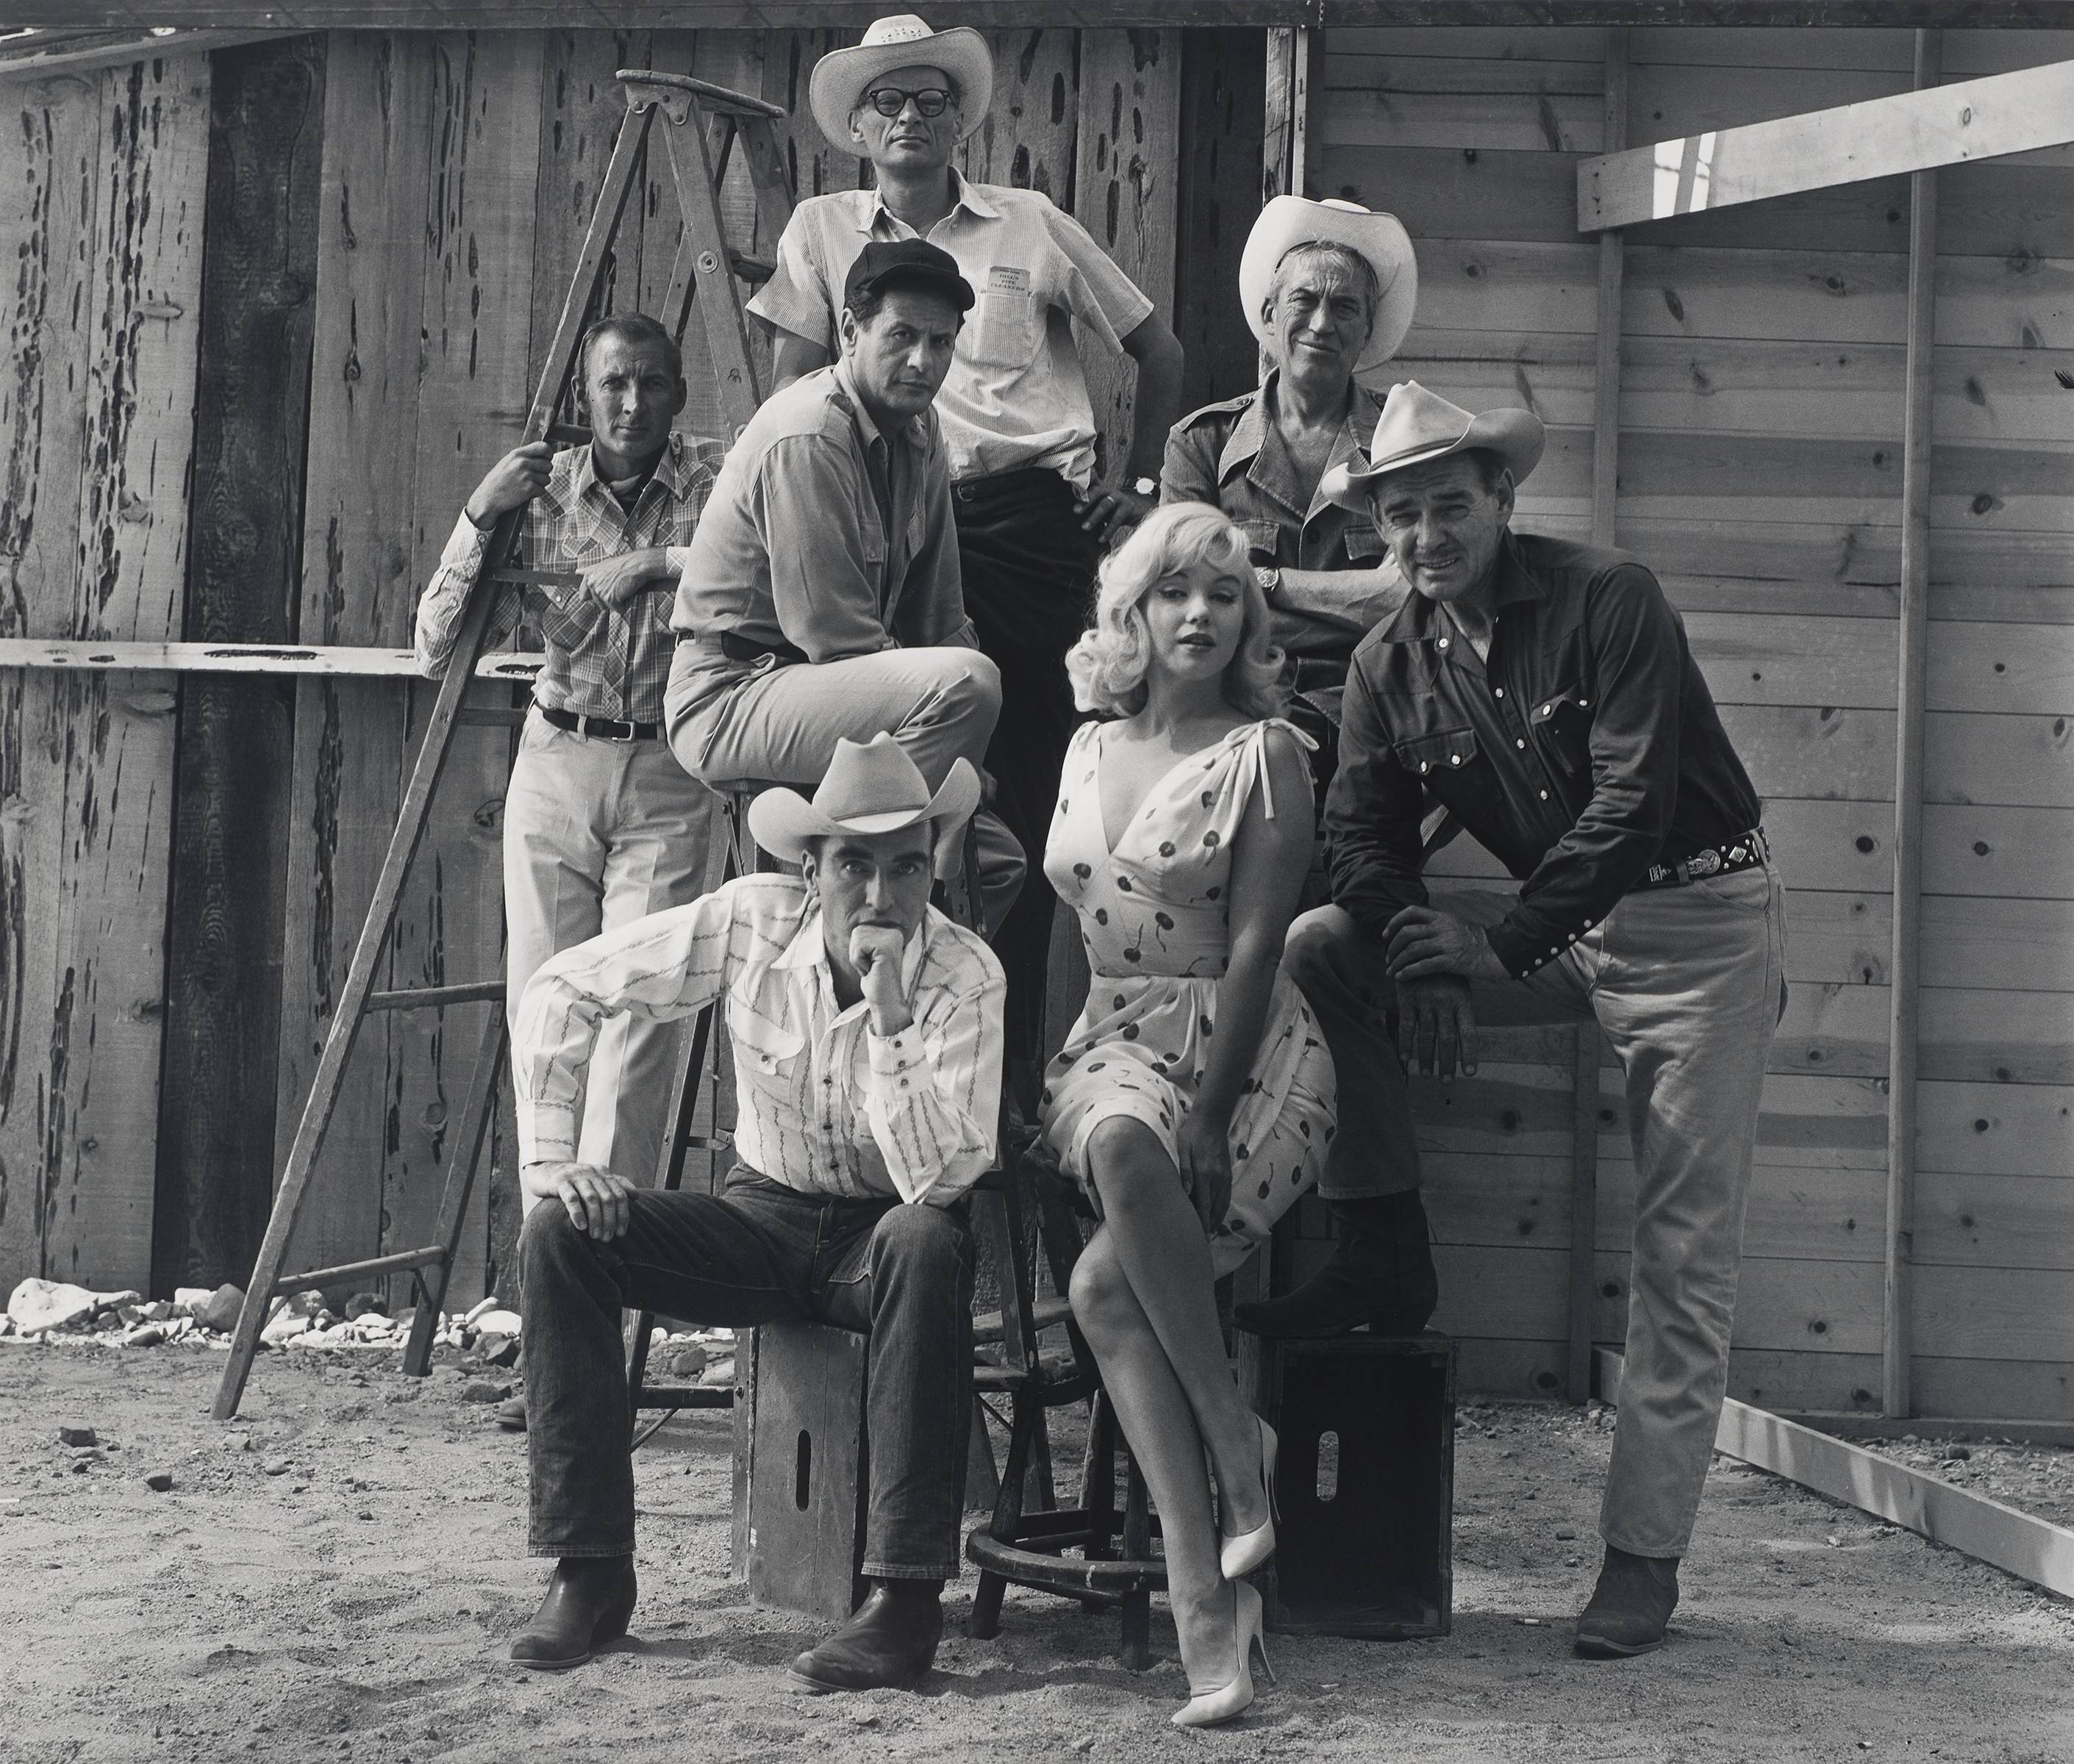 Elliott Erwitt (American, b. France 1928), Reno, Nevada, 1960. Gelatin silver print, 25.7 x 30.2 cm (image). Harry Ransom Center Collection © Elliott Erwitt/Magnum Photos